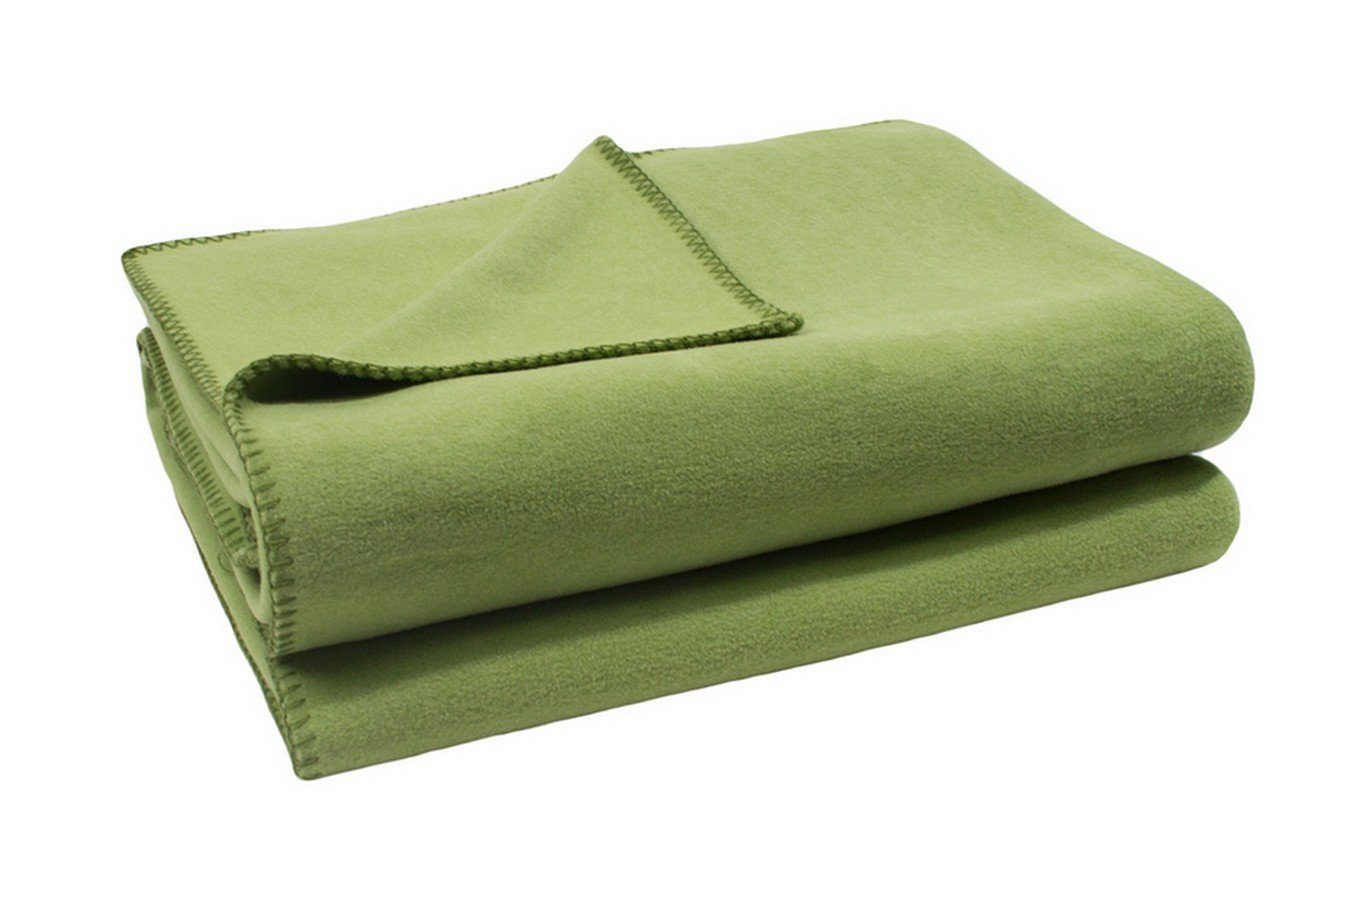 Wohndecke zoeppritz Soft-Fleece Decke 180 daslagerhaus x cm living 220 grün